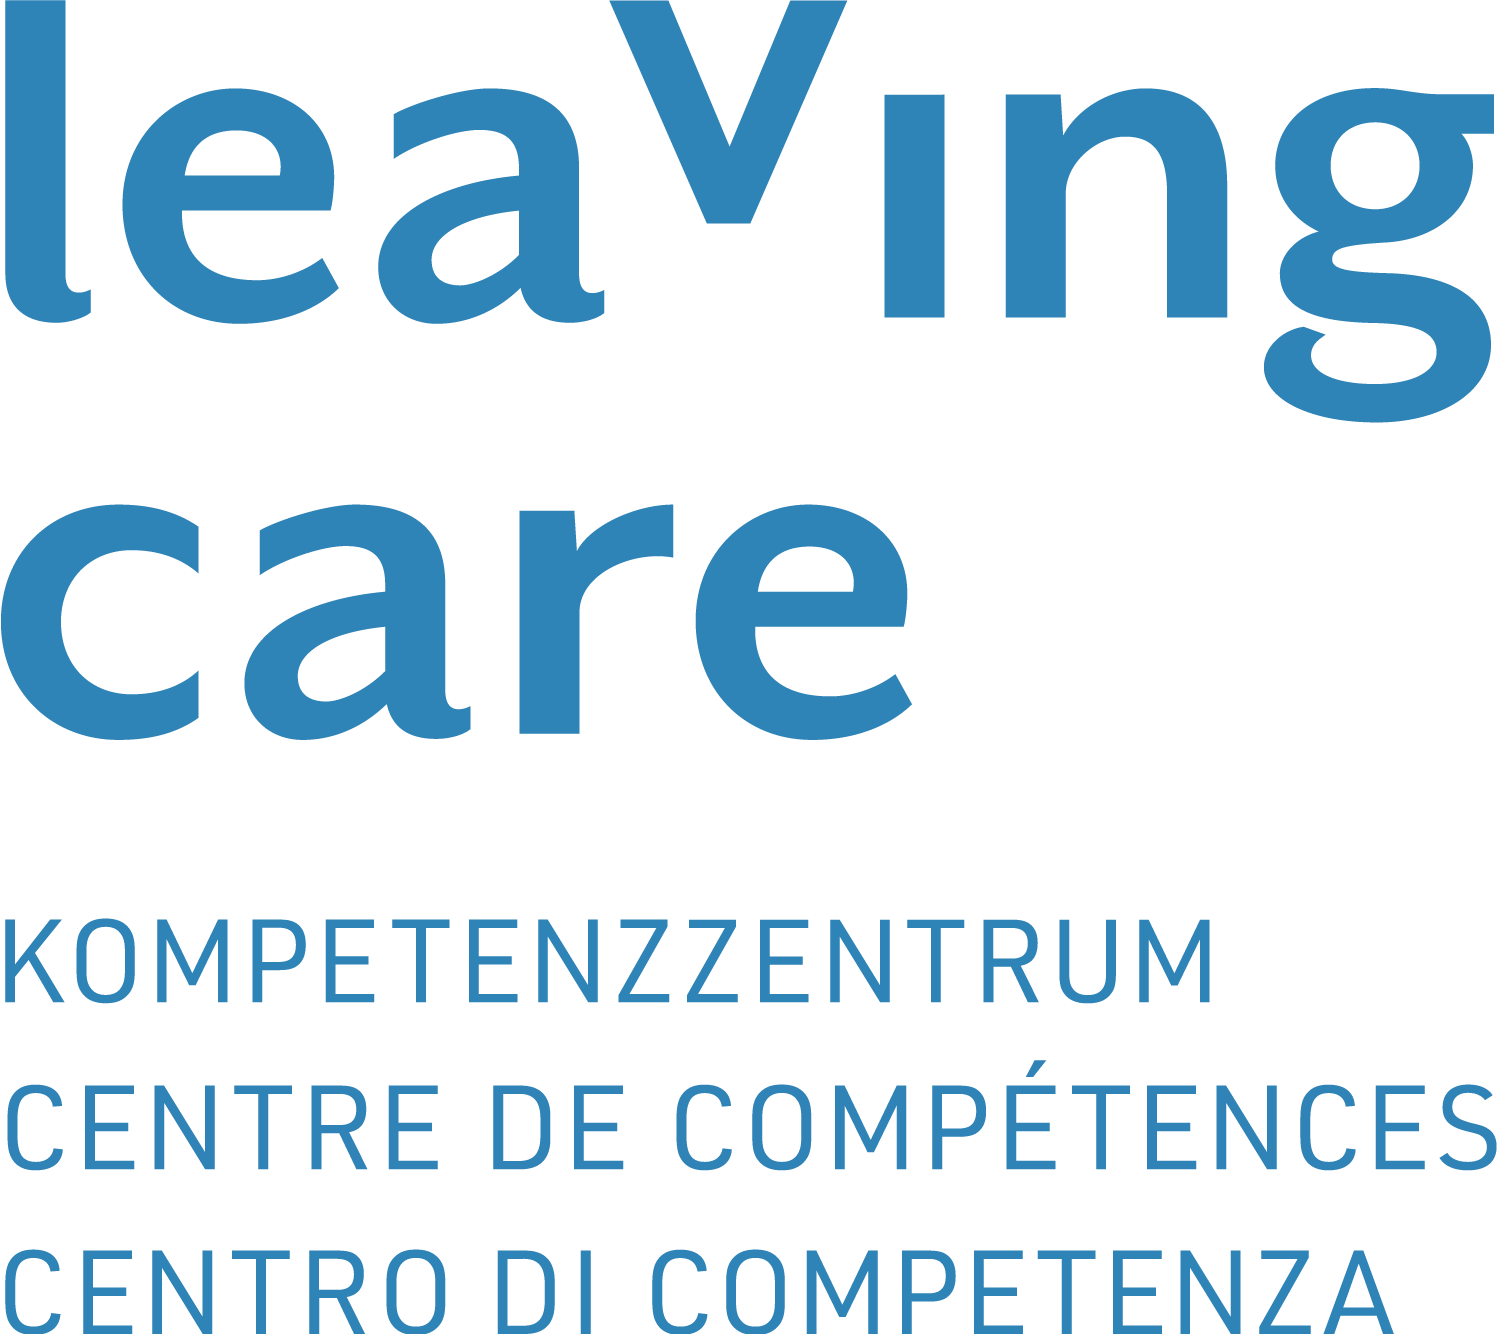 Kompetenzzentrum Leaving Care